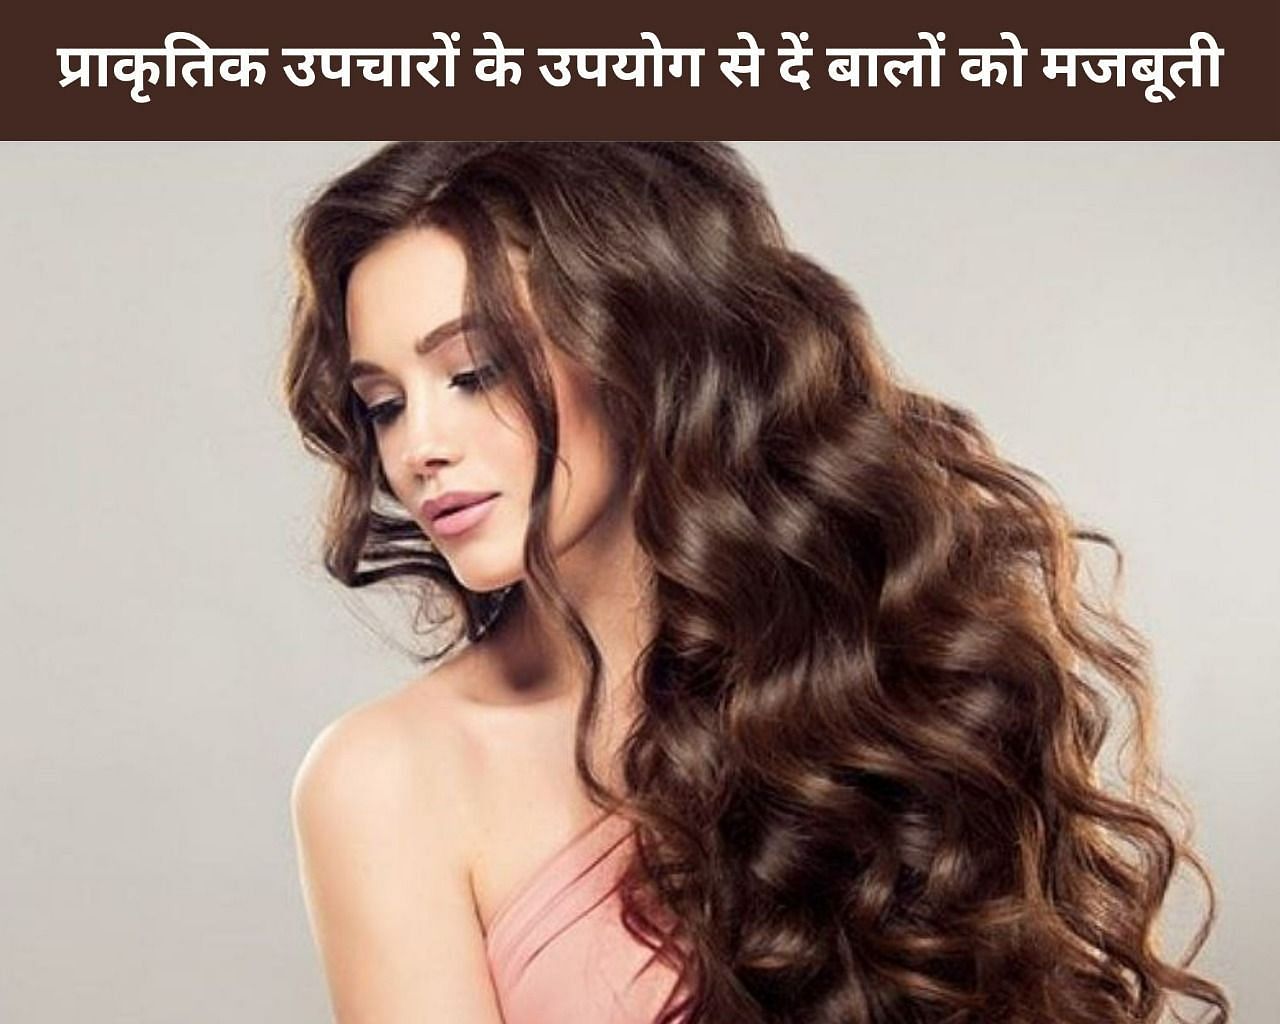 बल क मलयम बनन क घरल नसख  Soft Hair Treatment At Home in Hindi   Balo Ko Mulayam Kaise Kare